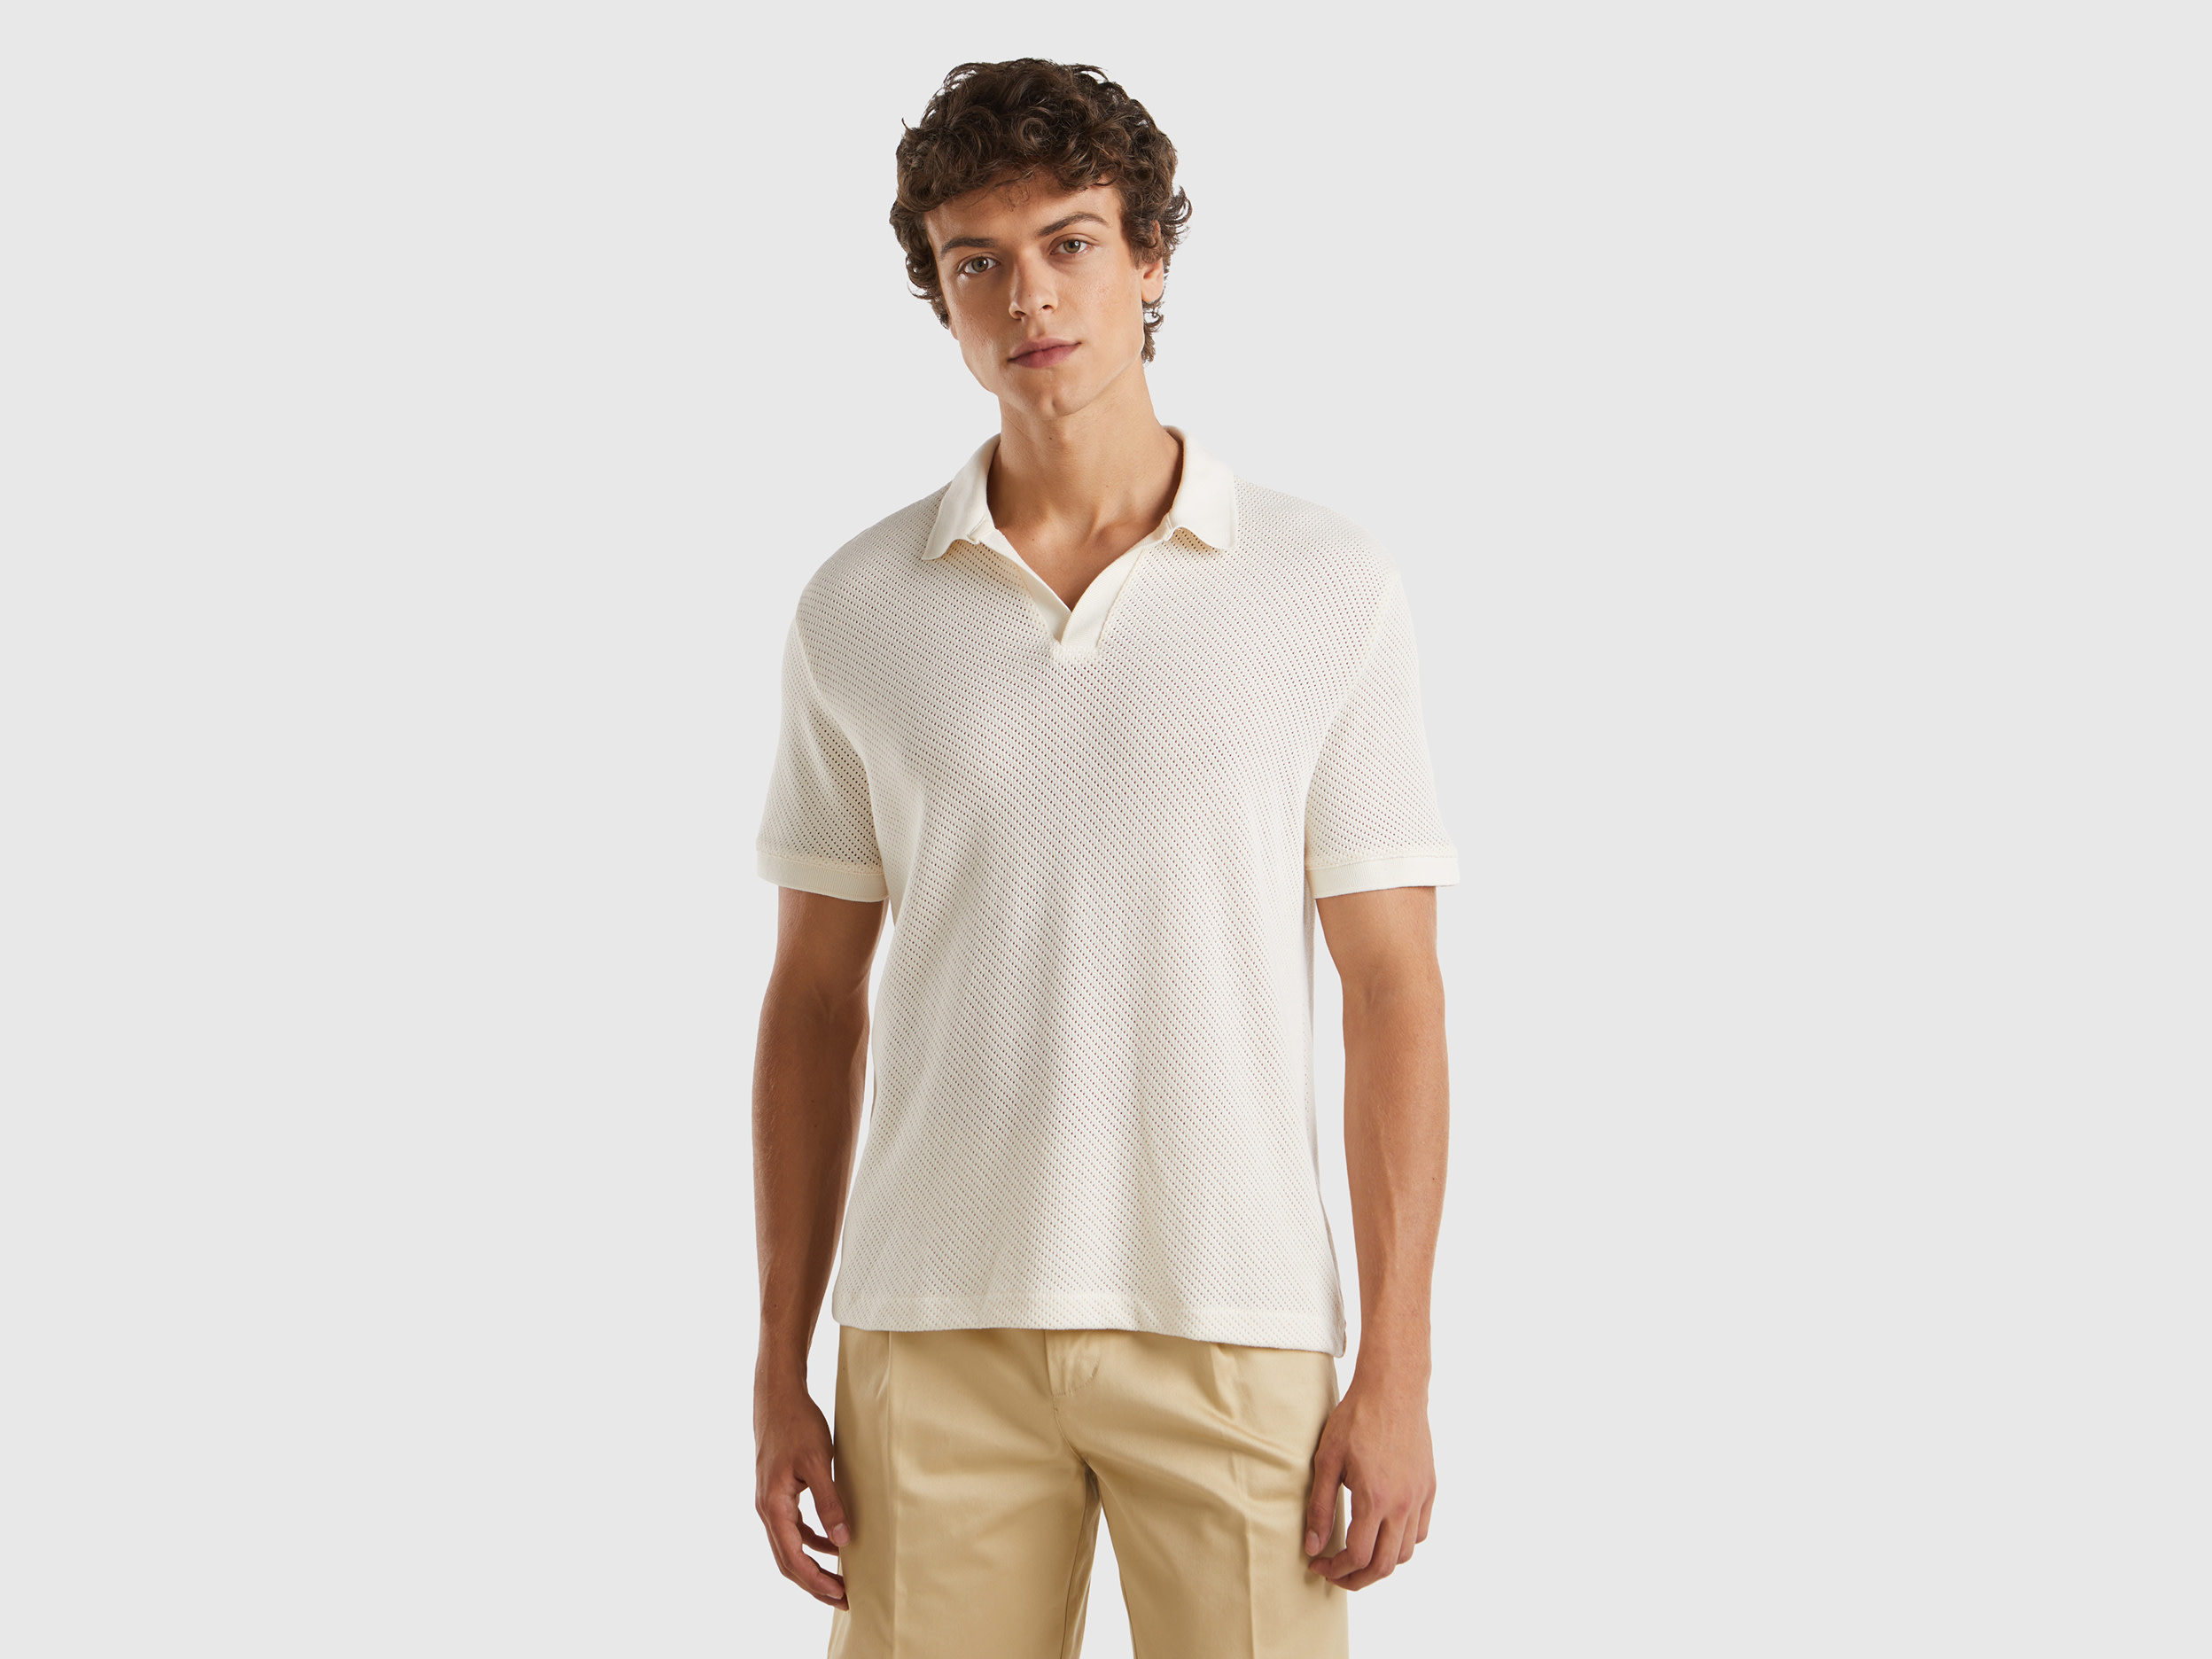 Image of Benetton, Perforated Cotton Polo Shirt, size L, Creamy White, Men